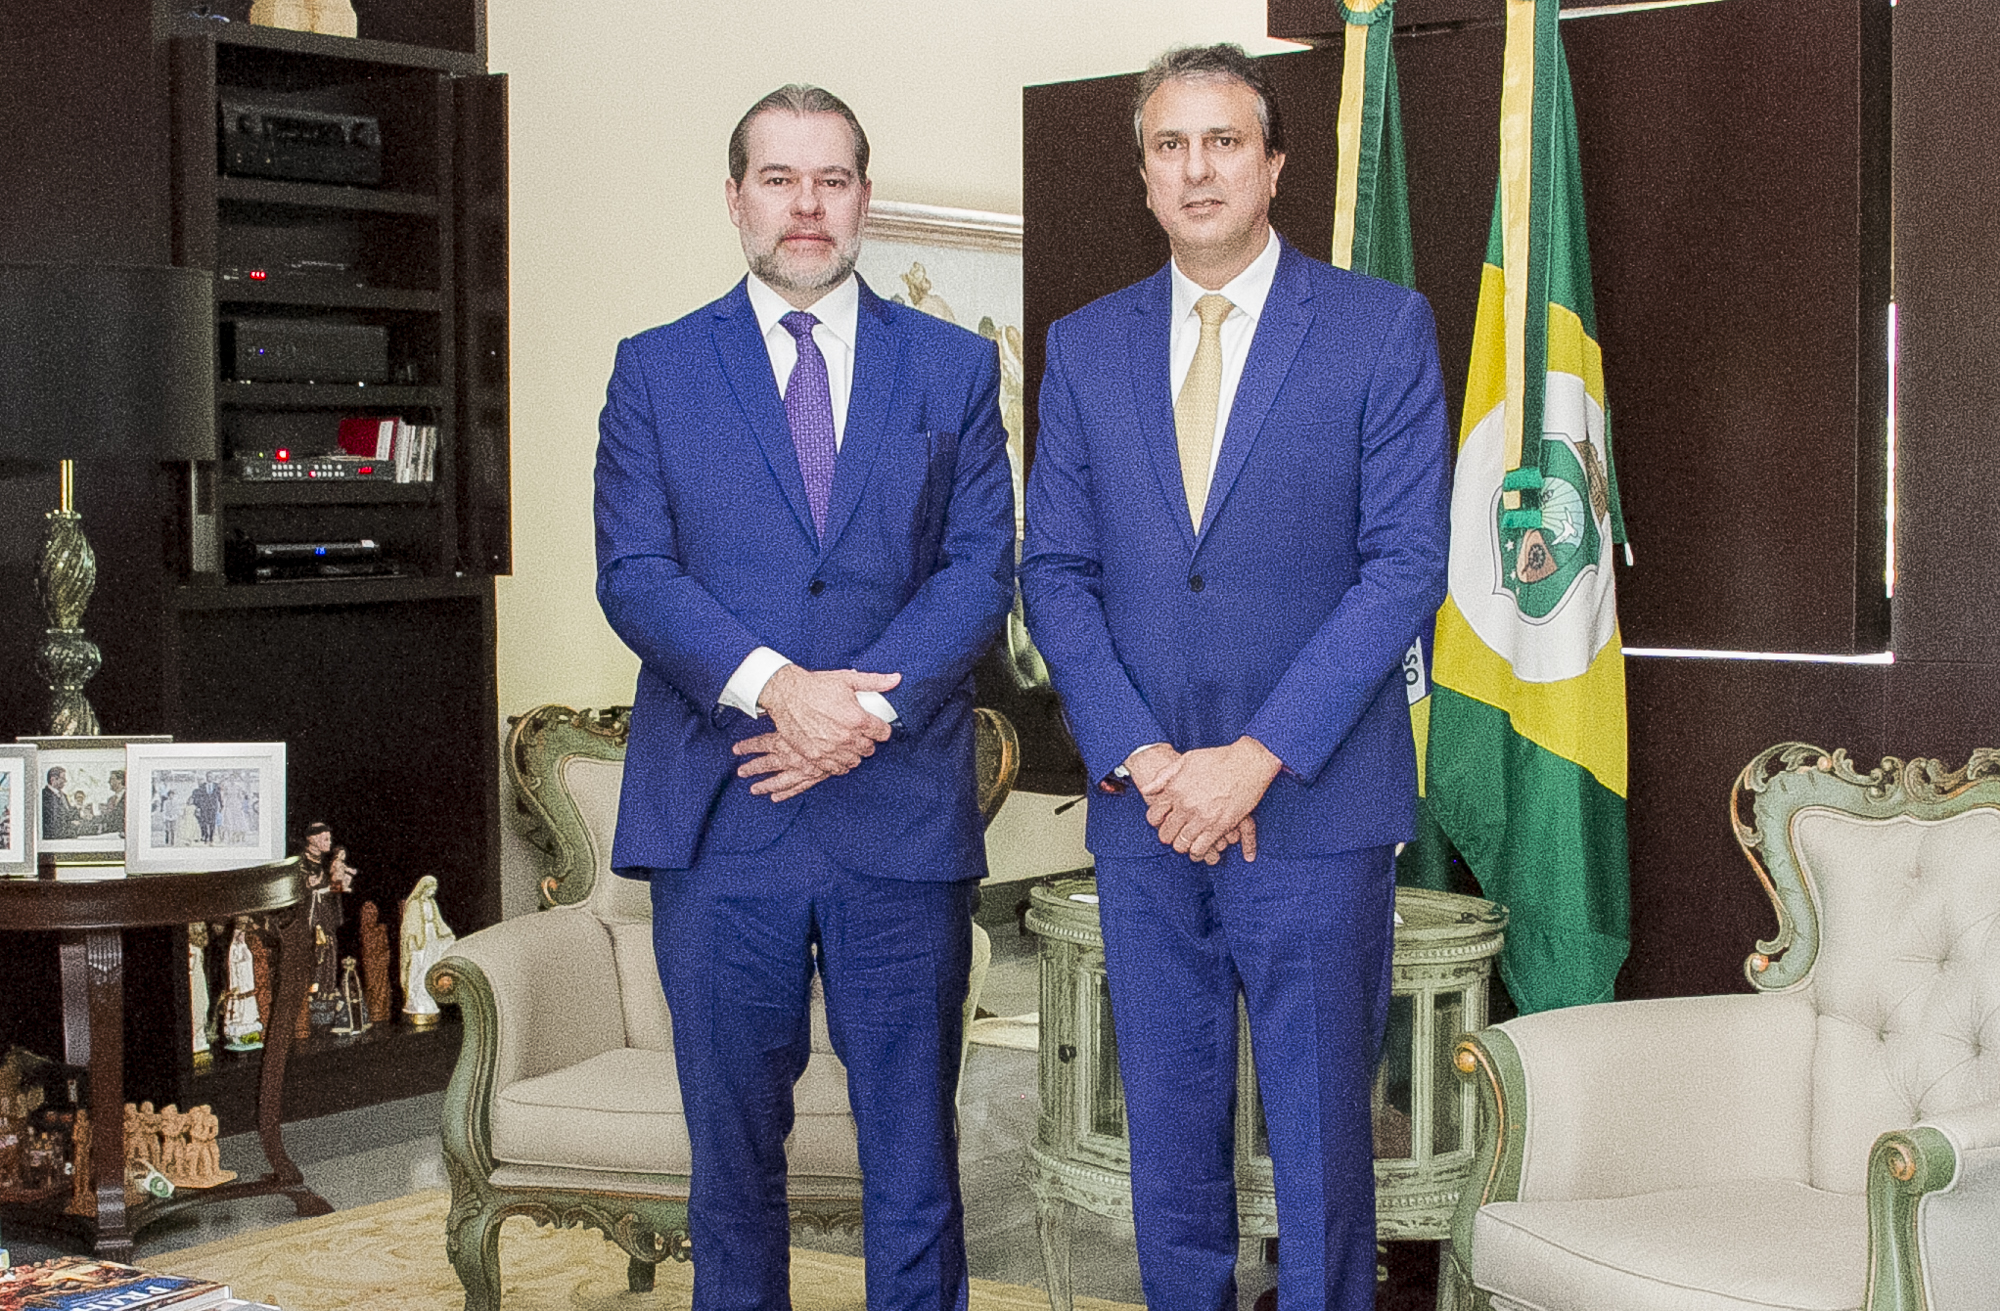 Governo do Ceará recebe visita do presidente do Supremo Tribunal Federal